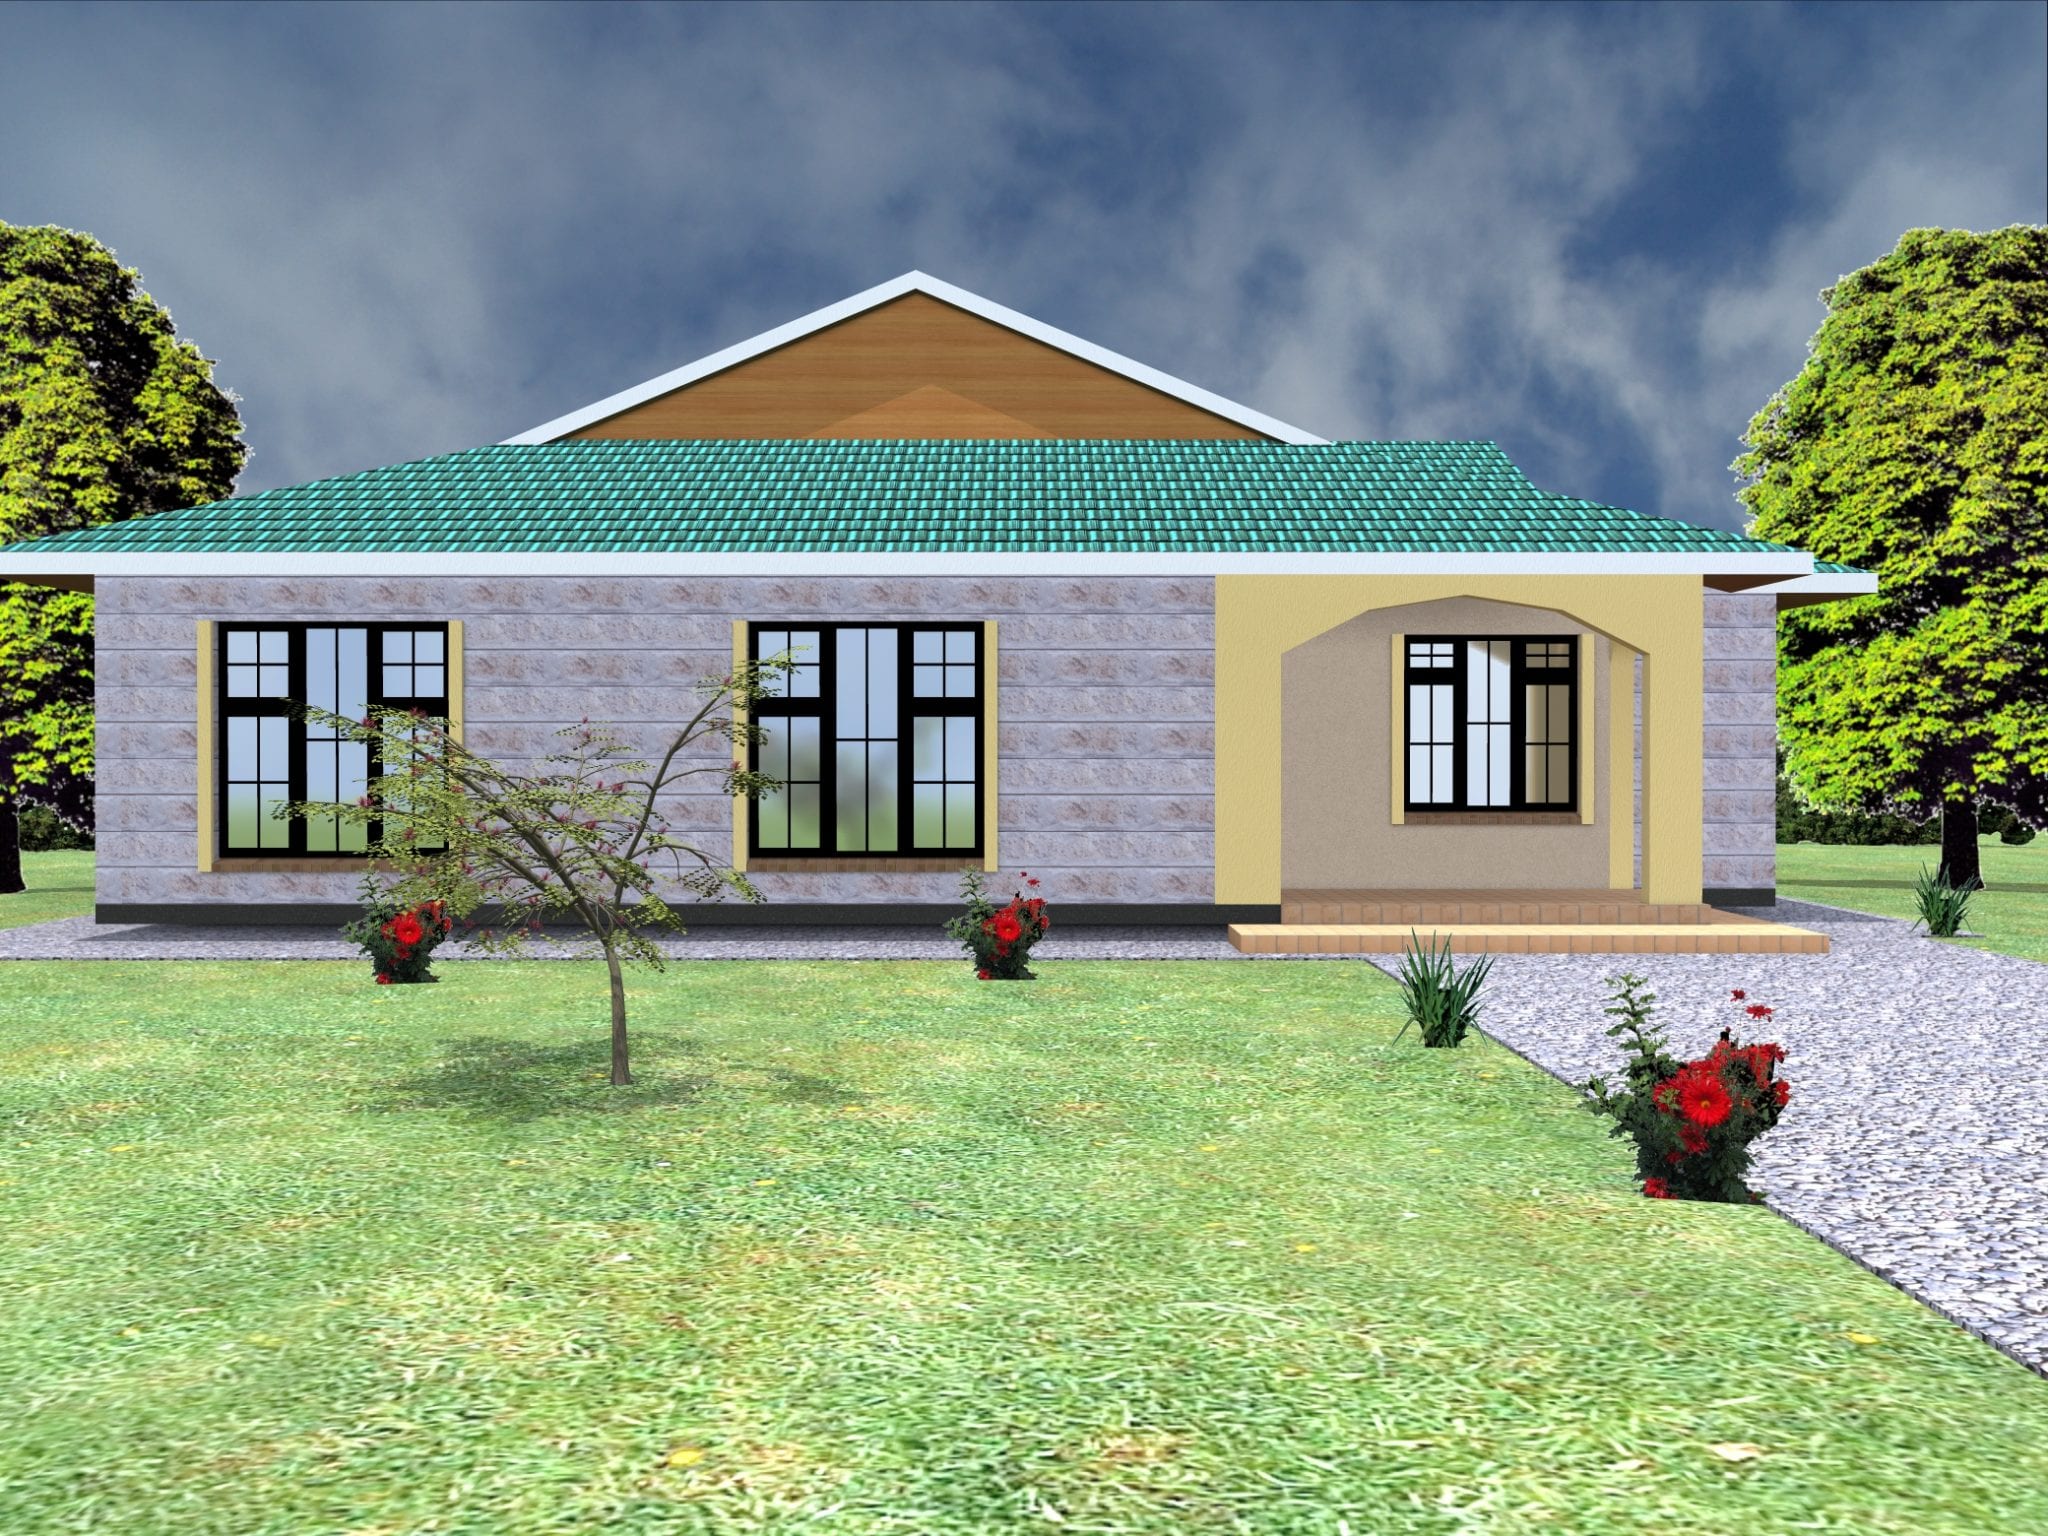 3 Bedroom Bungalow House Plans In Kenya Hpd Consult